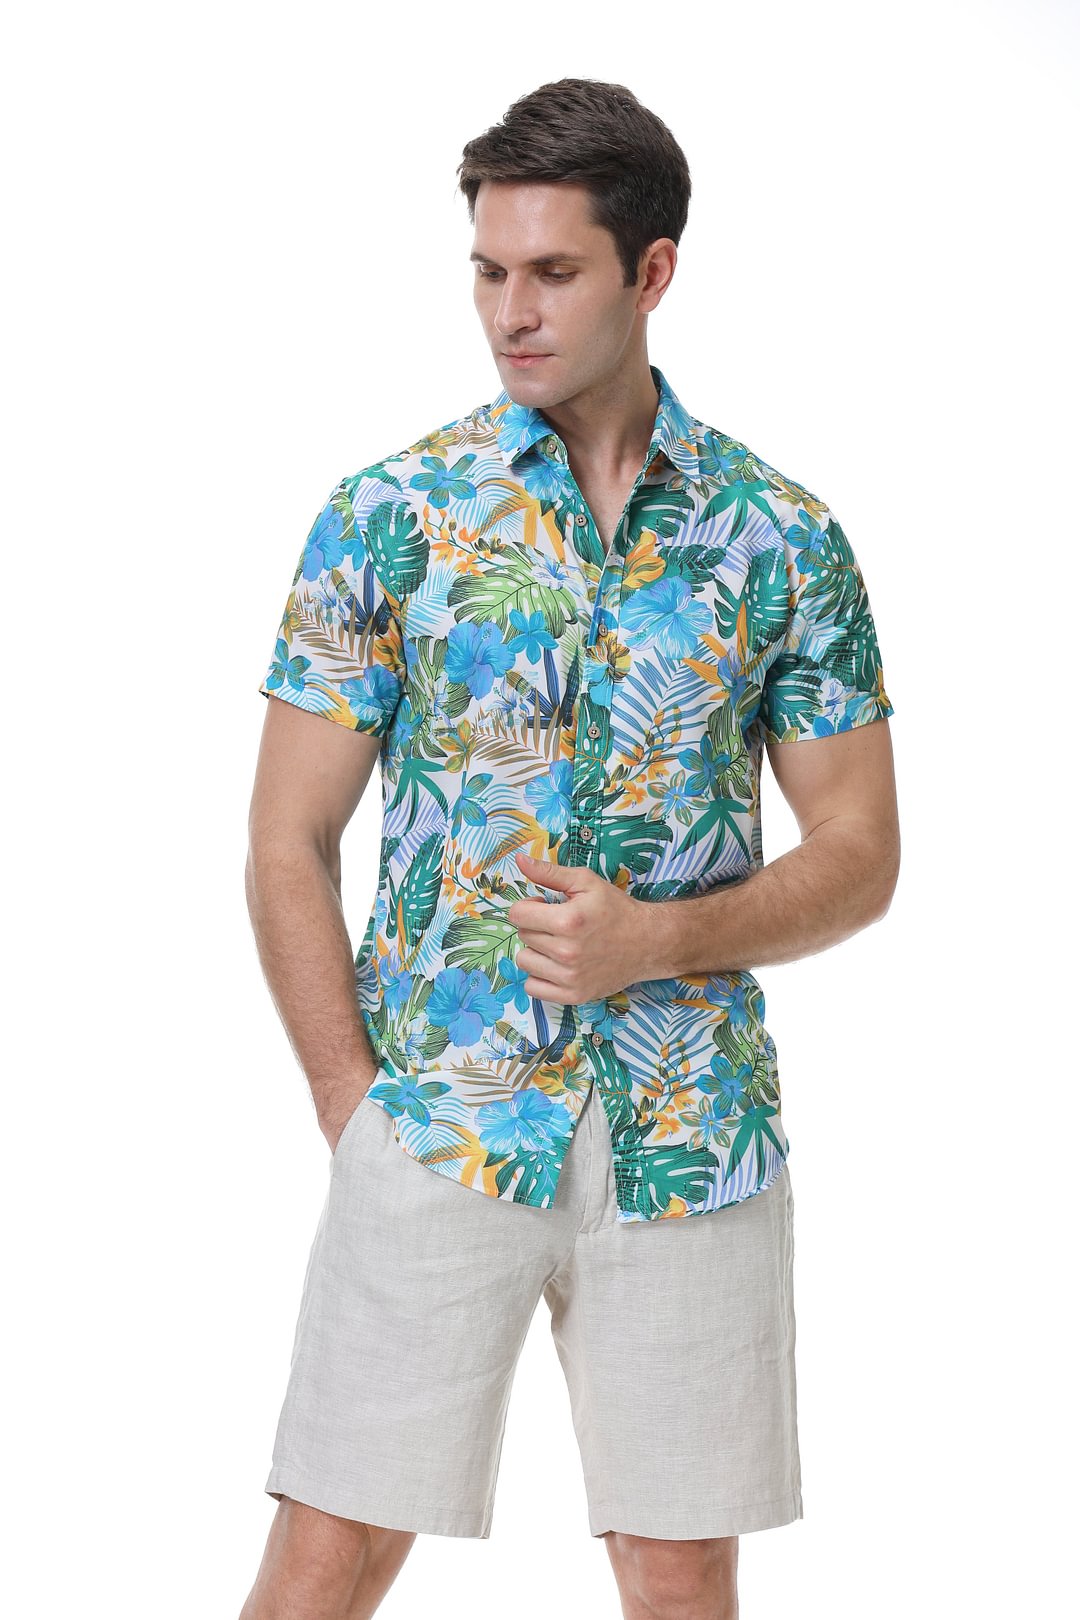 Men's Aloha Beach Shirt White Leaf Alex Vando Fashion